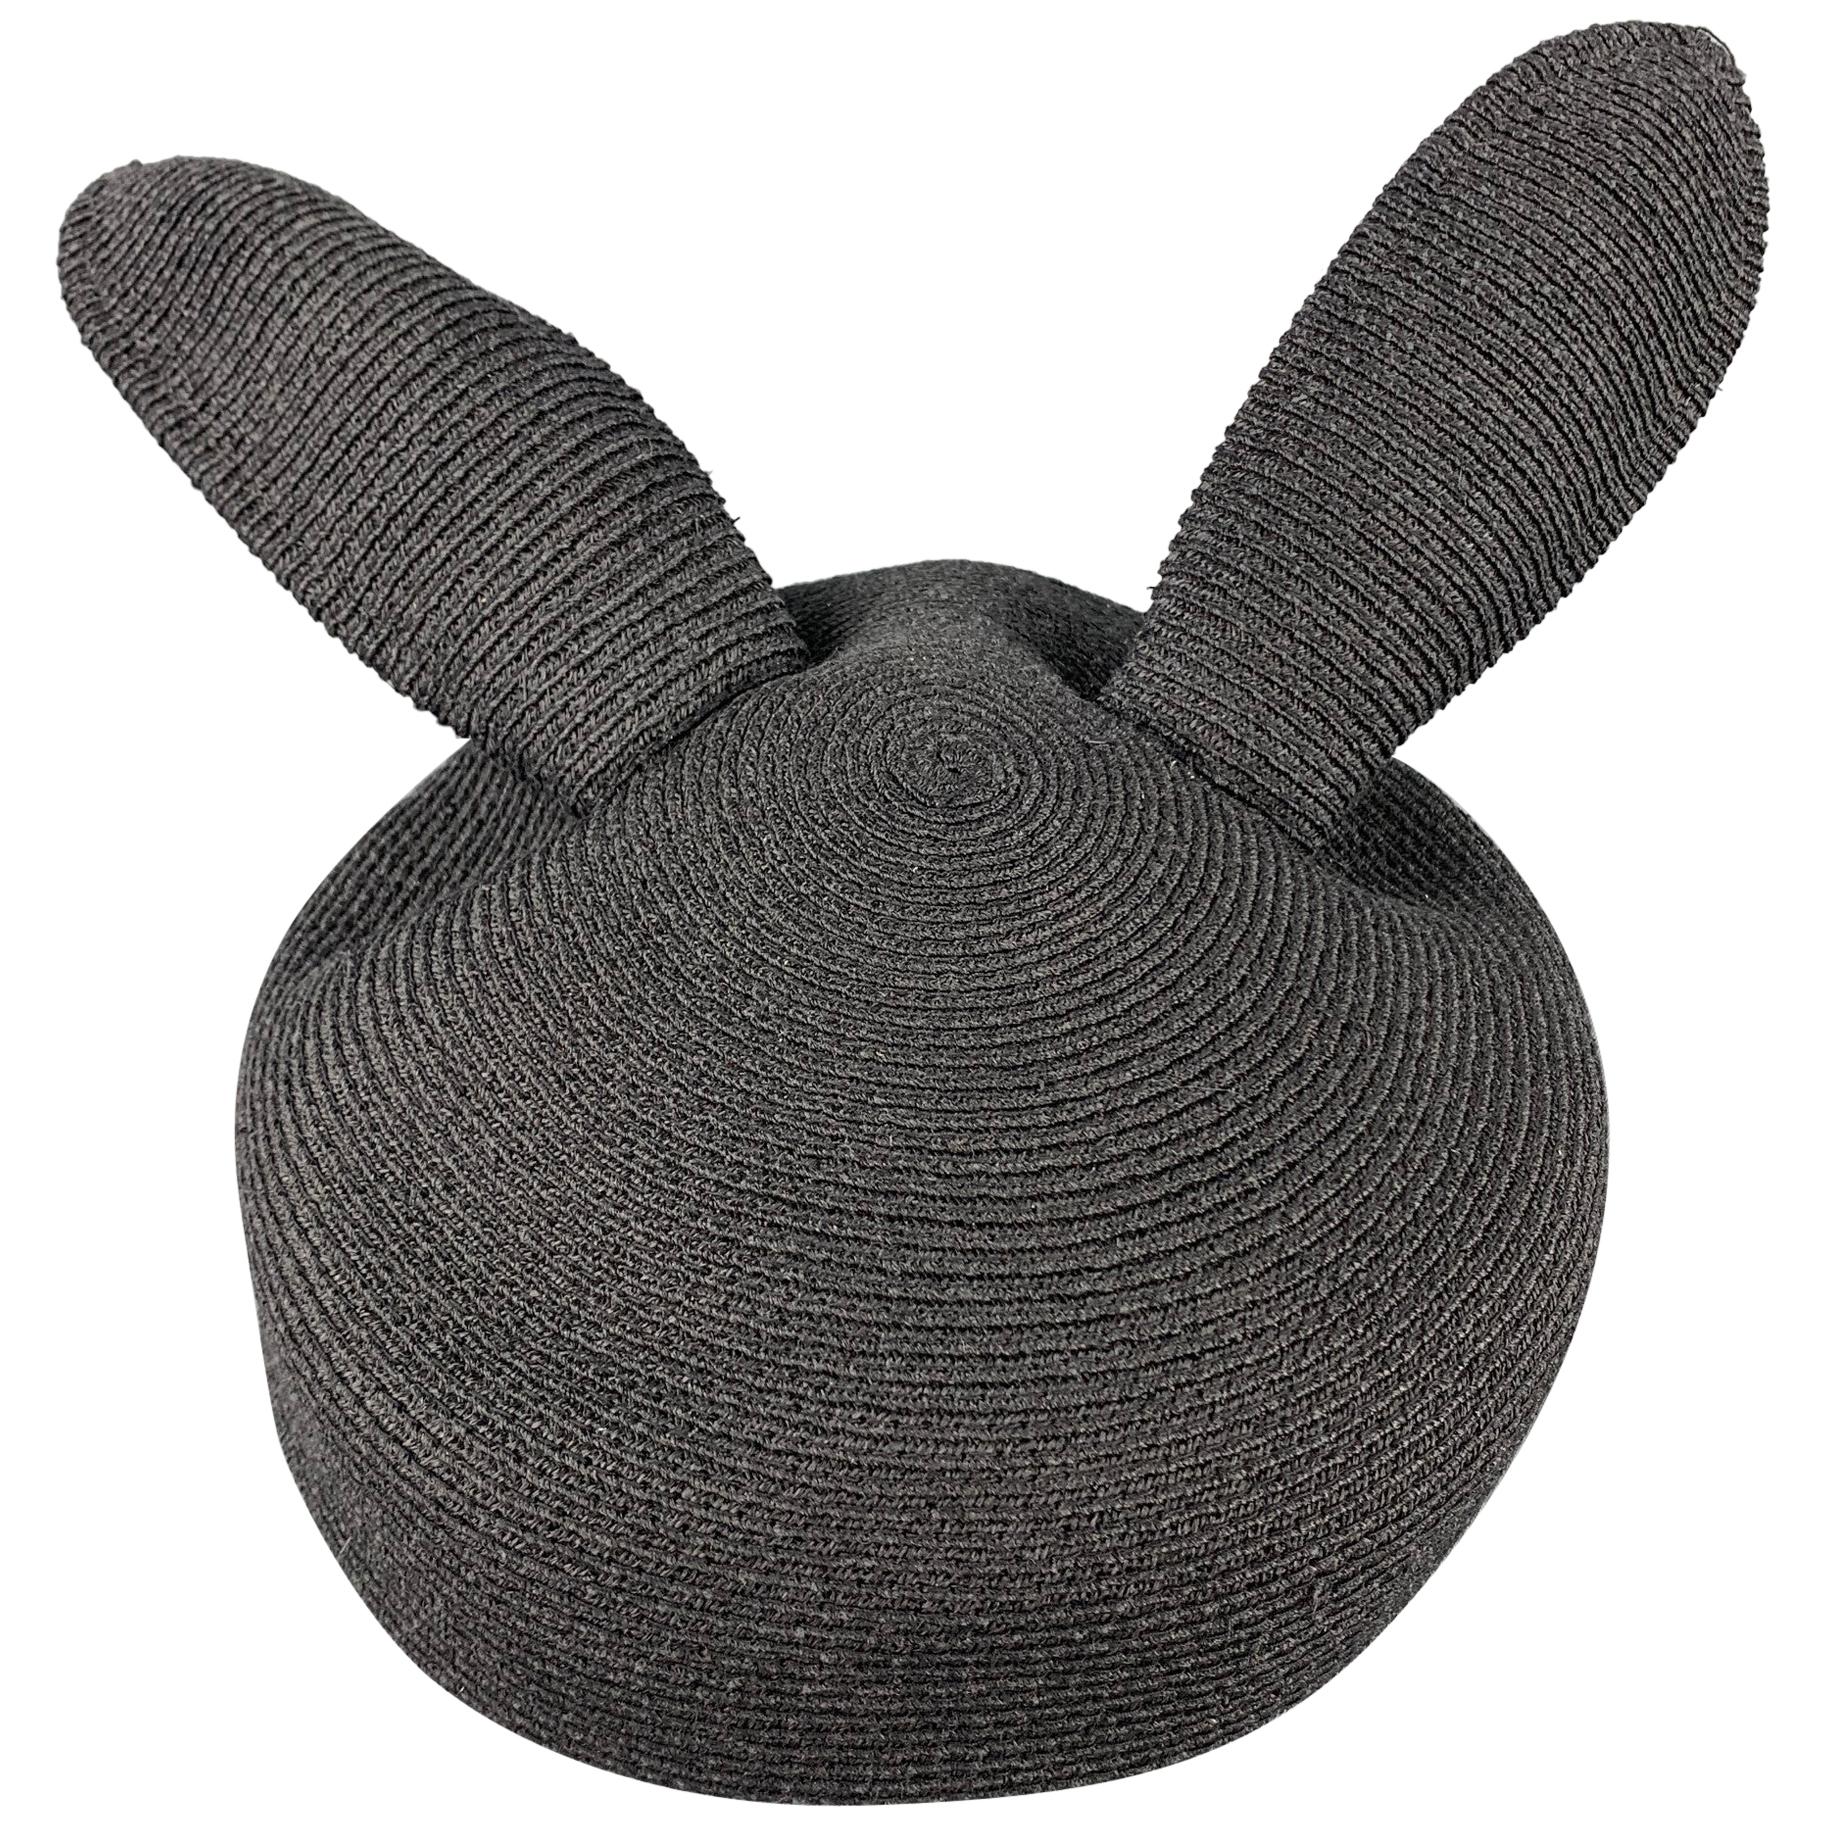 EUGENIA KIM Beatrix Black Woven Hemp / Cotton Hat